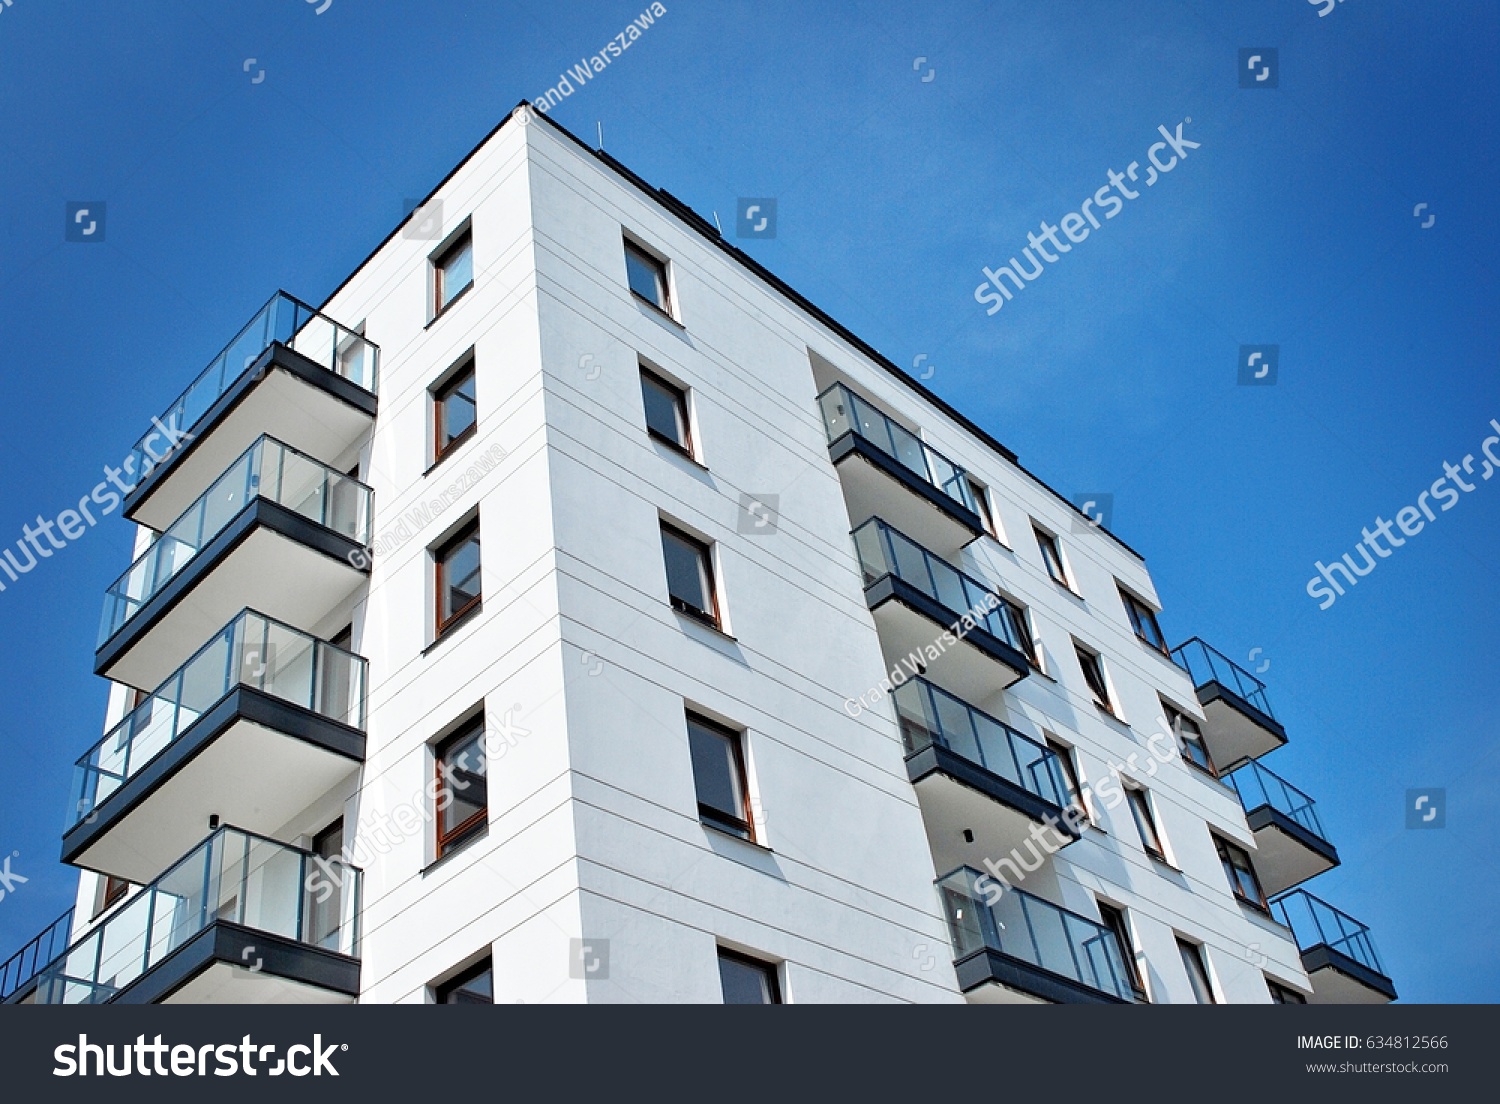 Modern, Luxury Apartment Building #634812566